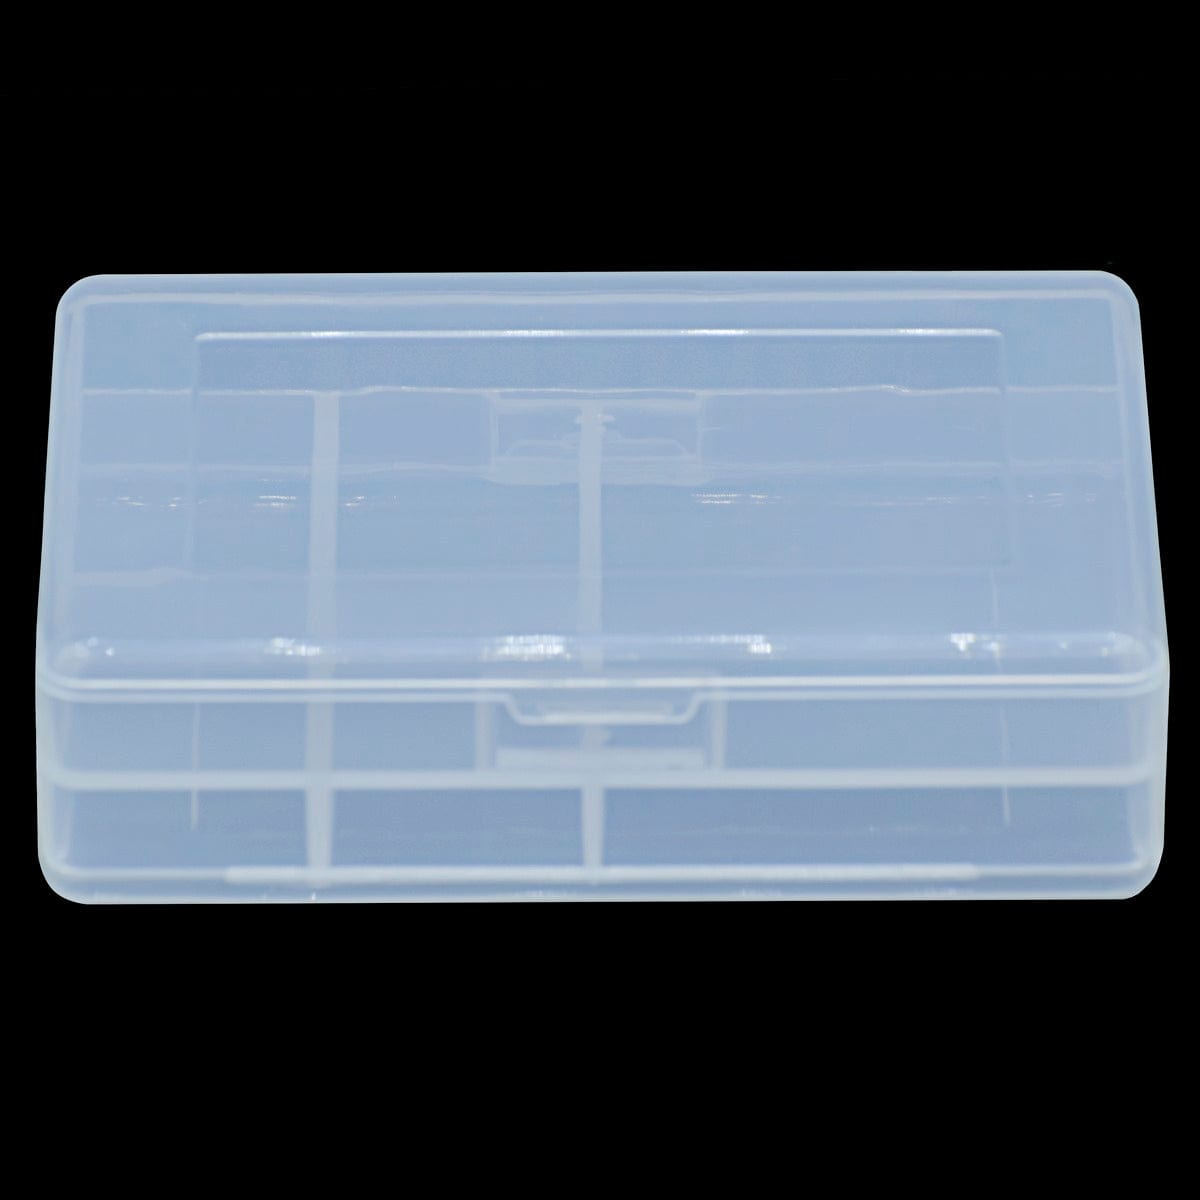 jags-mumbai Container Container Mini 2 Side Small Box Plastic 4530